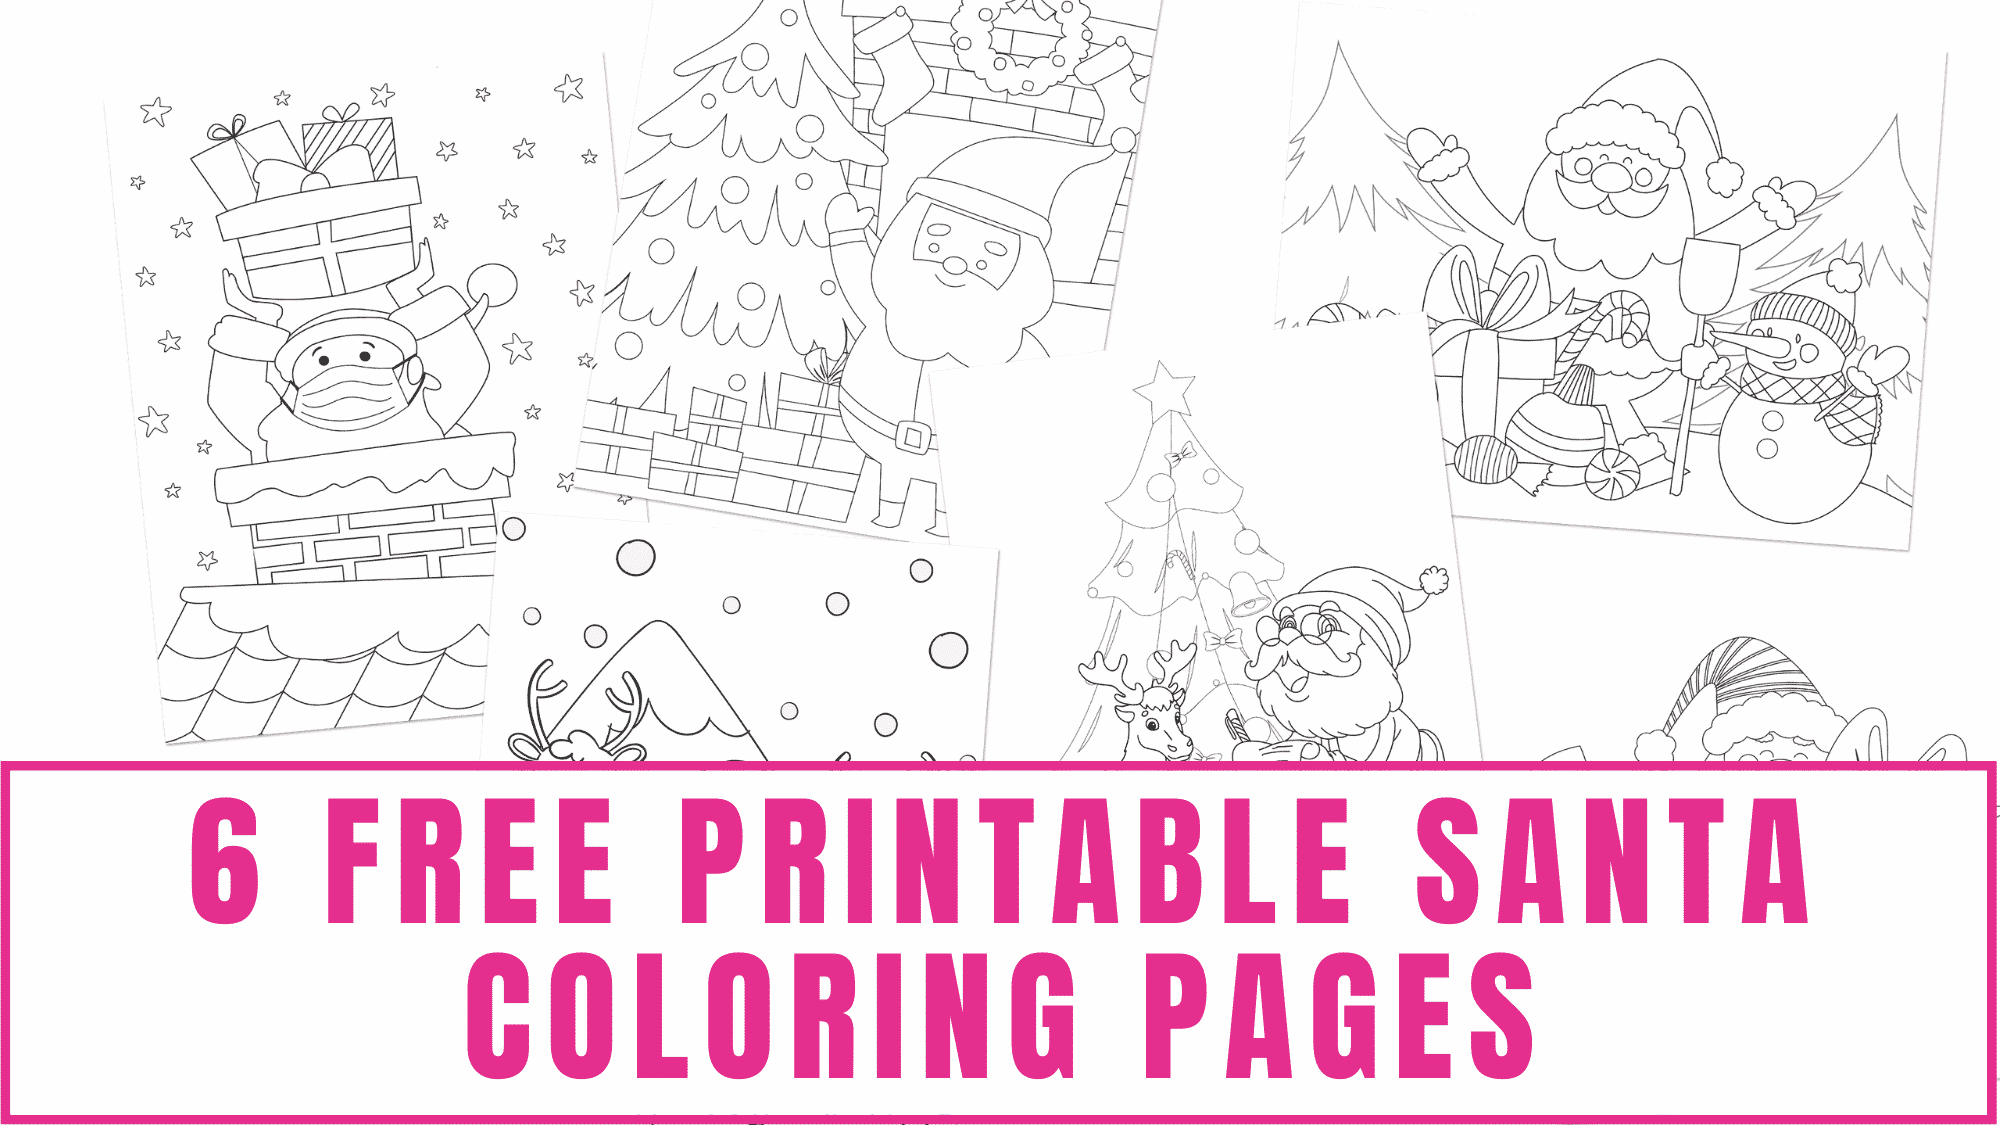 Free printable santa coloring pages